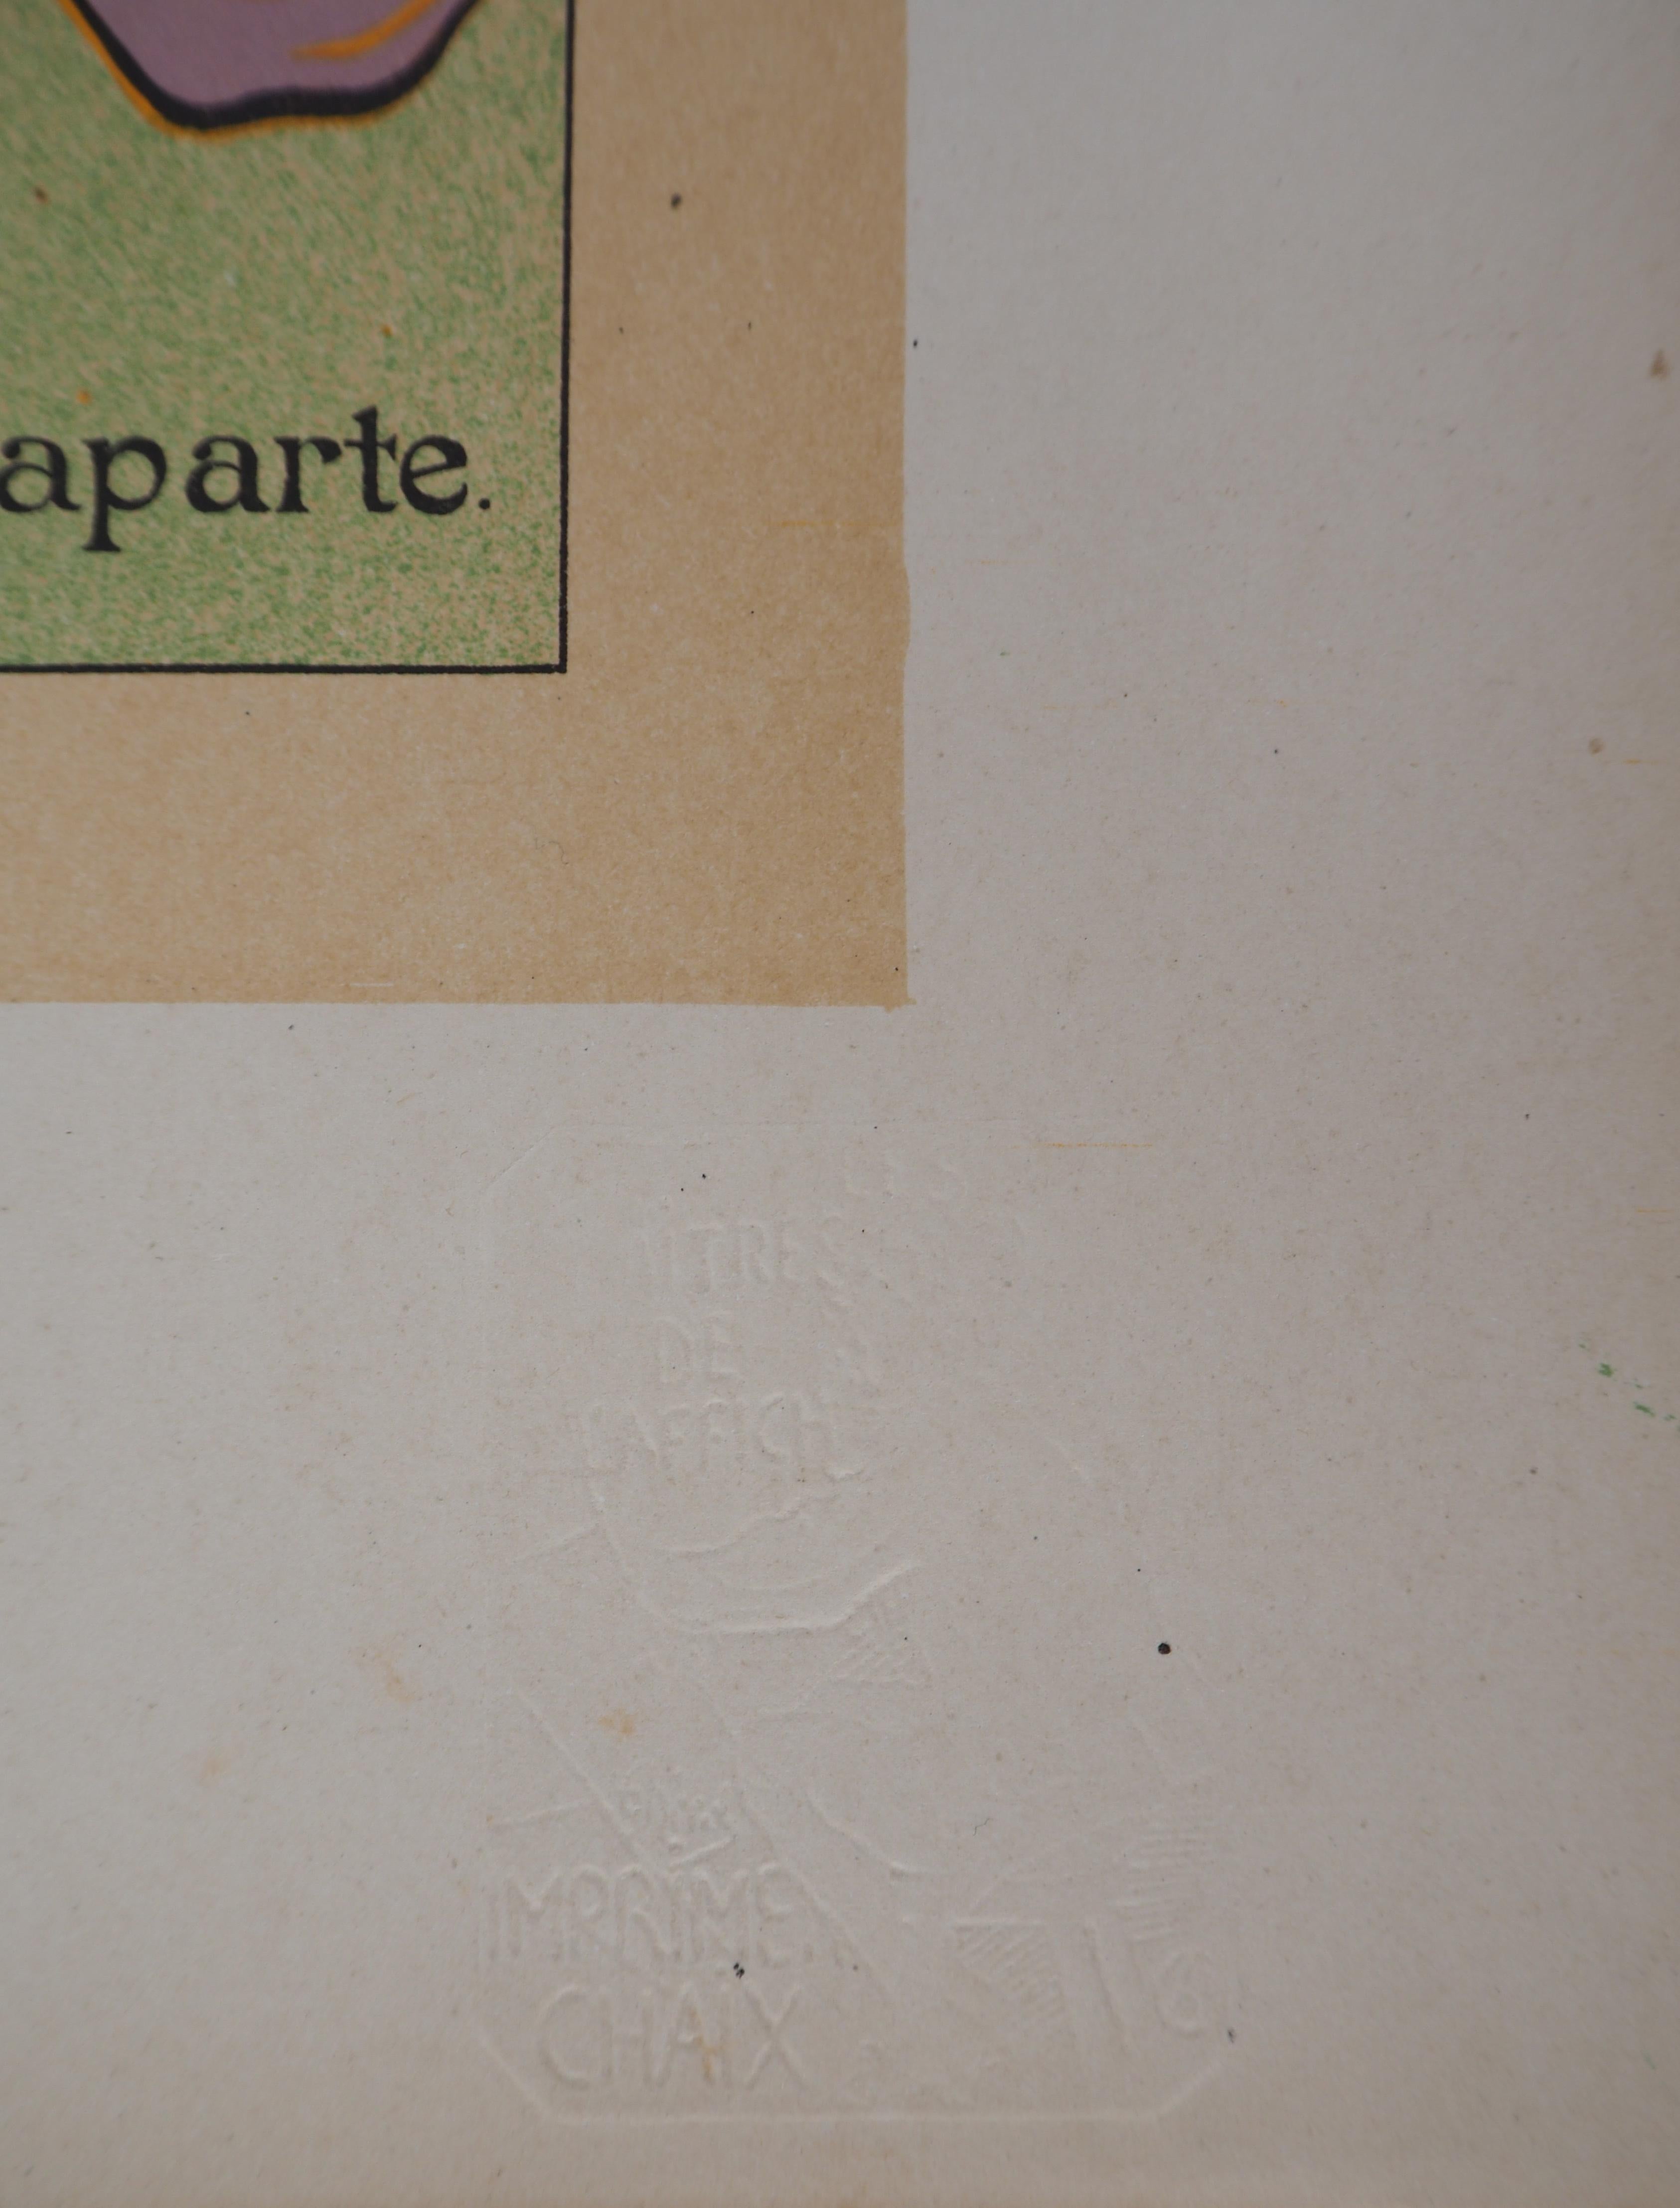 Georges DE FEURE
Salon des Cent

Lithograph
Printed signature in the plate
On vellum 
Size 39 x 29 cm (c. 15.3 x 11.4